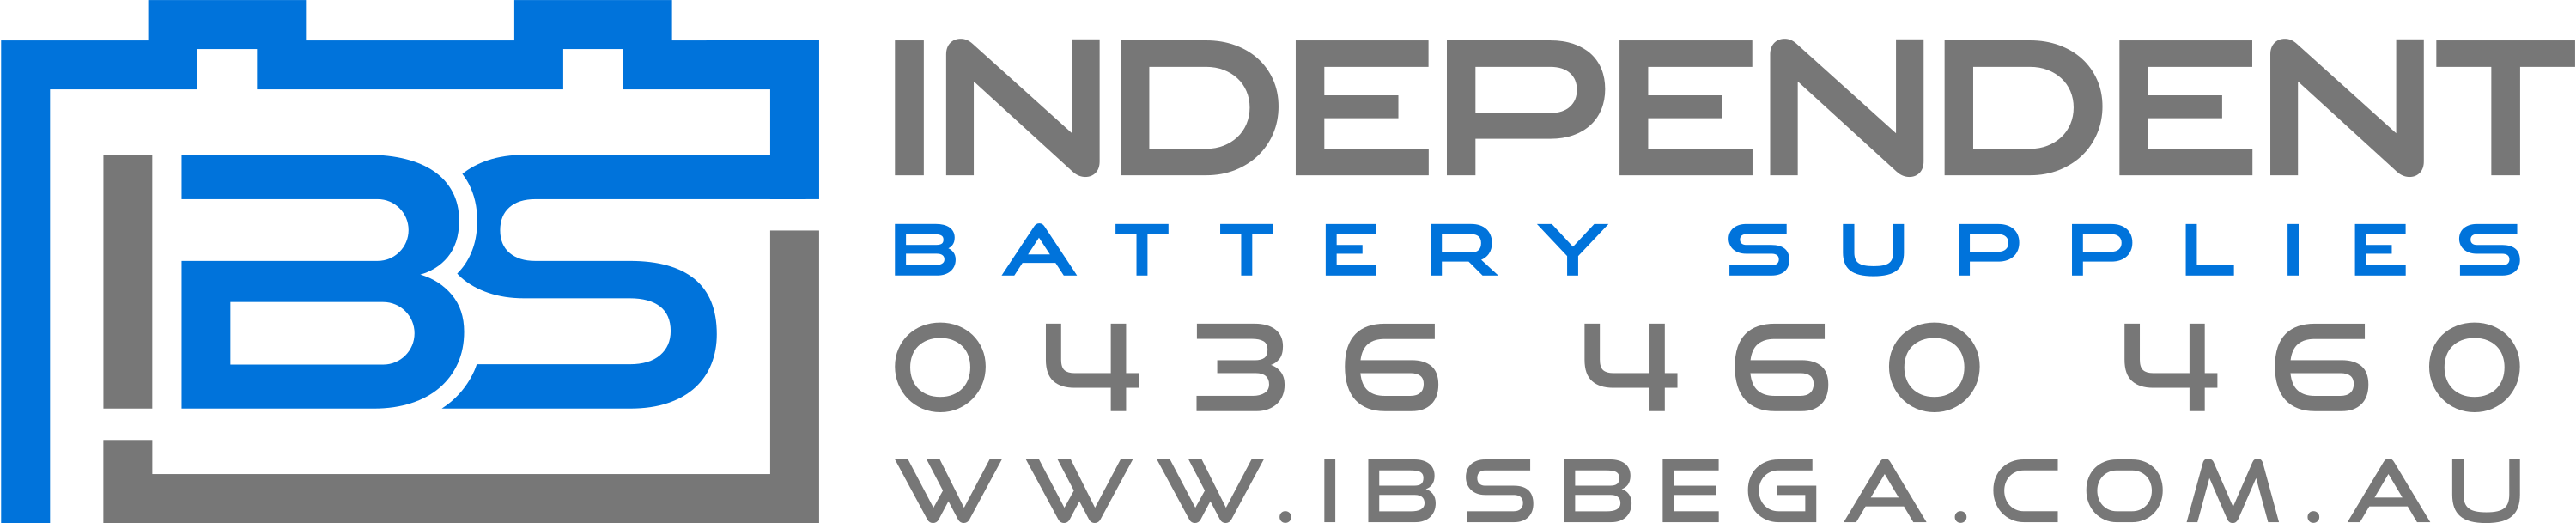 Independent Battery Supplies